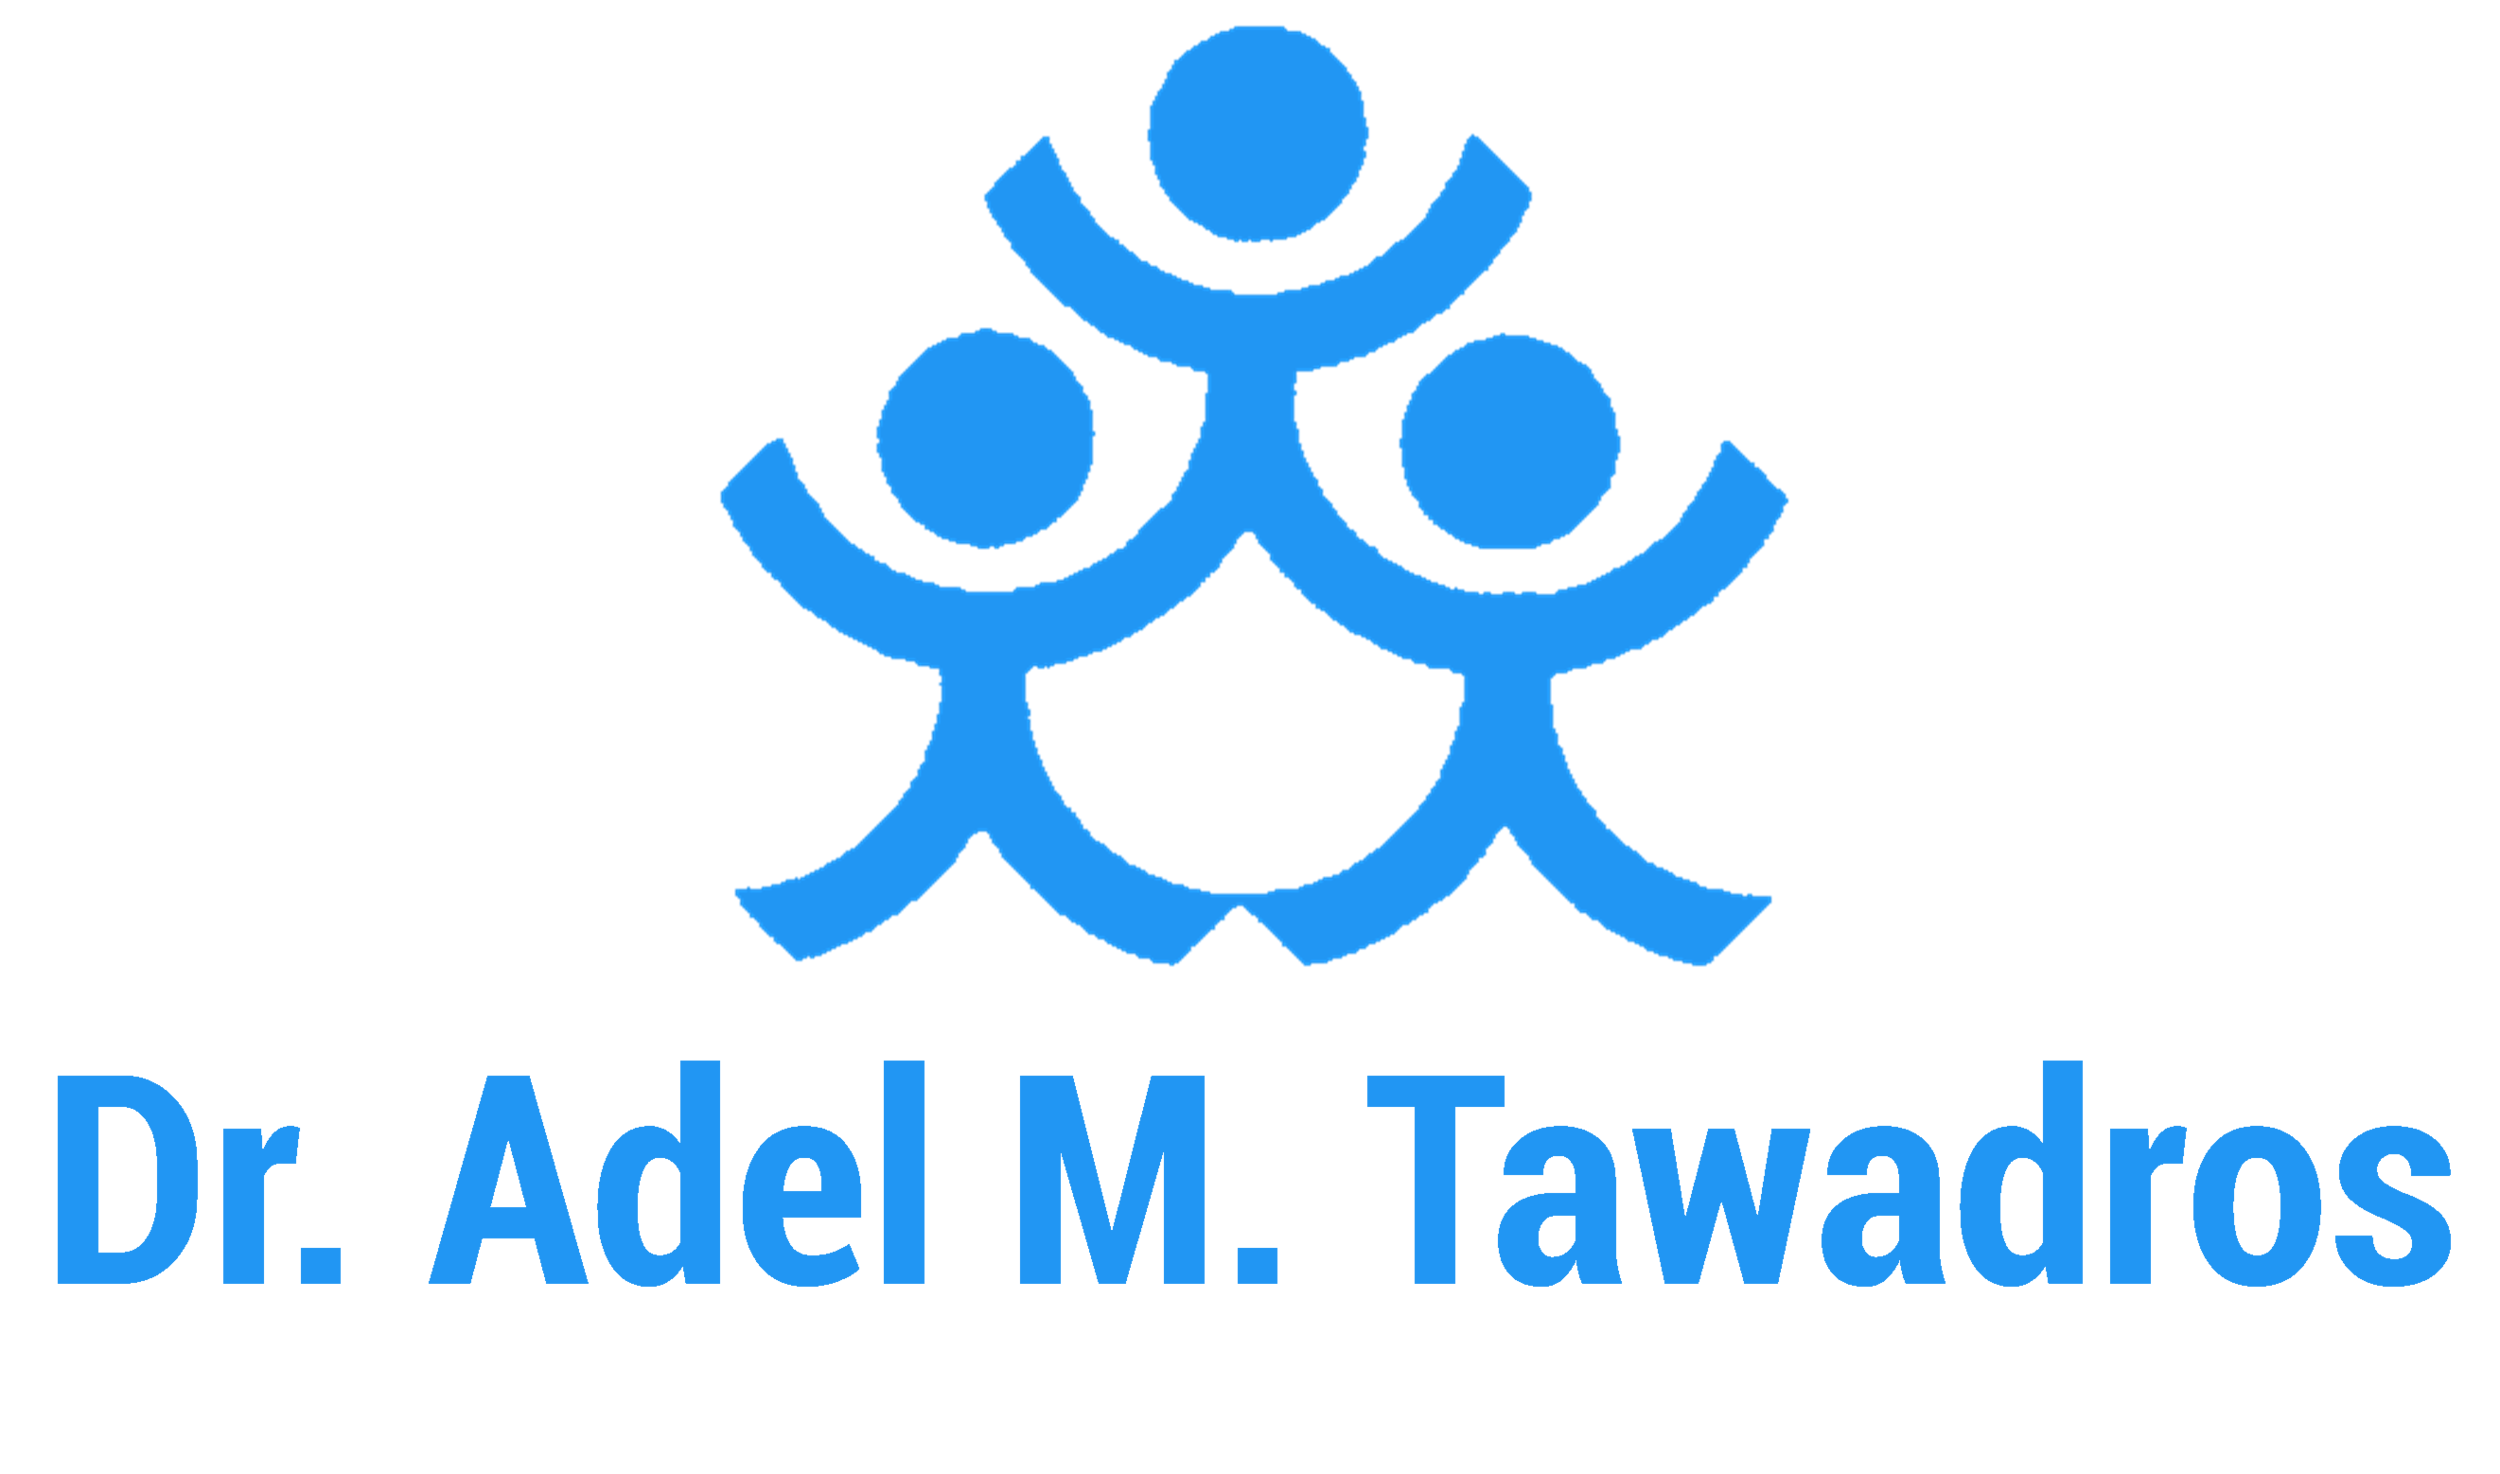 Dr. Adel M. Tawadros